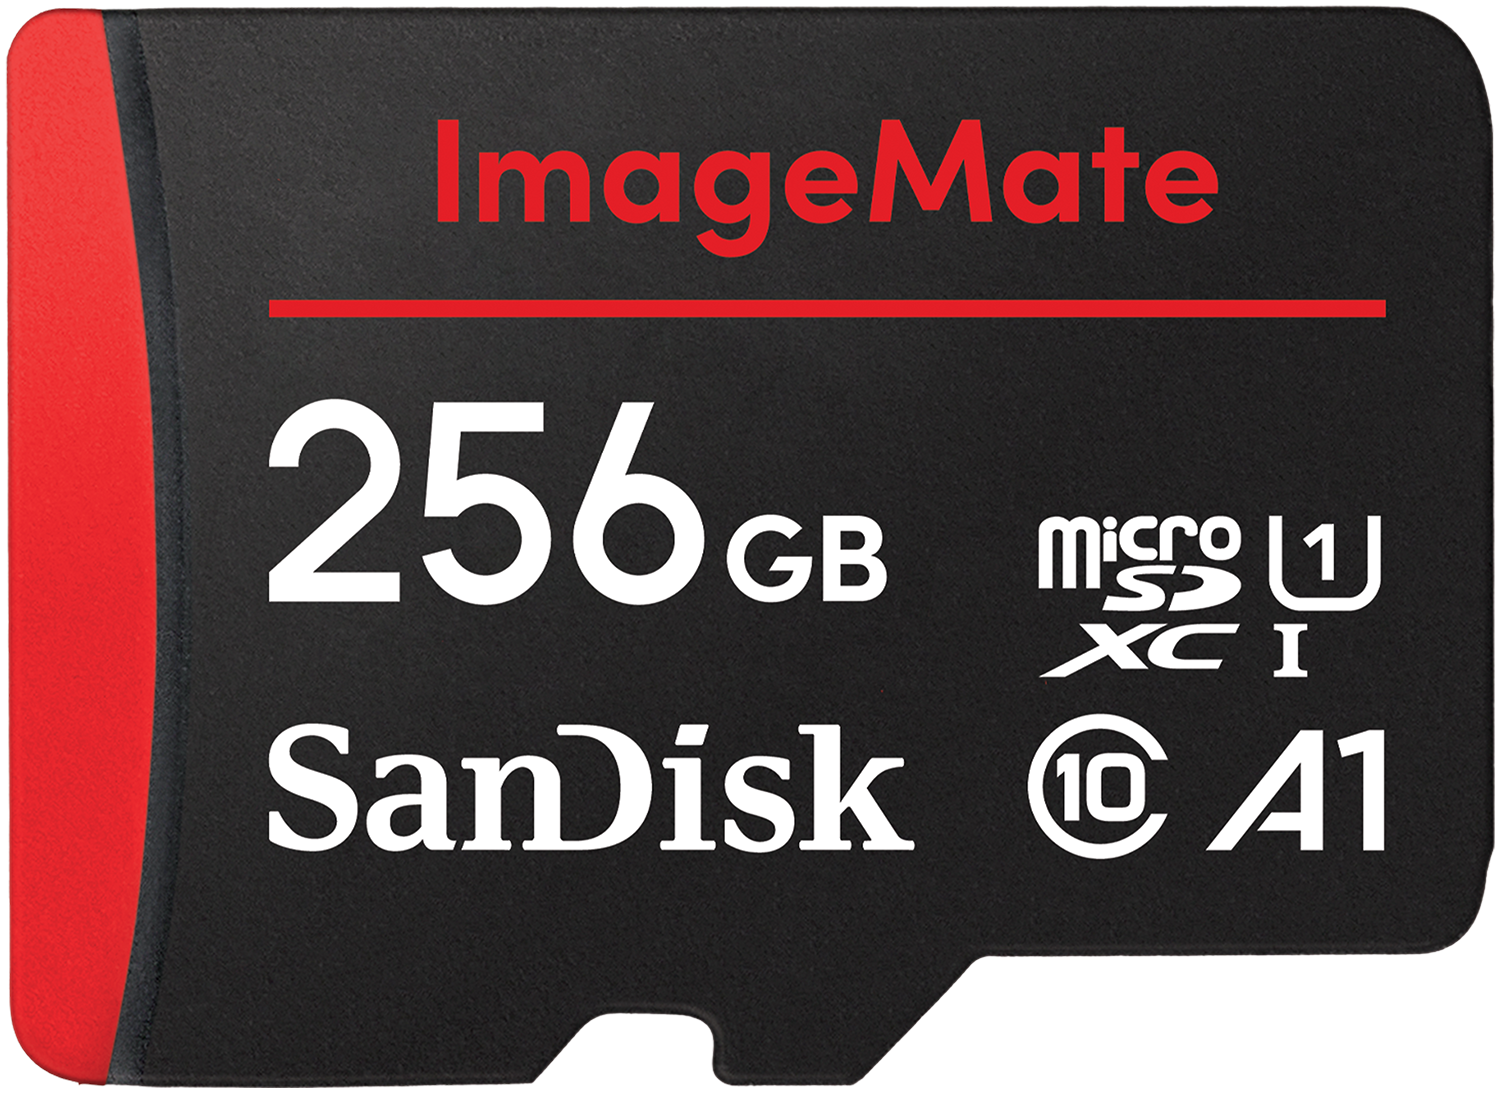 SanDisk 256GB ImageMate microSDXC UHS-I Memory Card - Up to 150MB/s - SDSQUA4-256G-Aw6ka - image 1 of 7